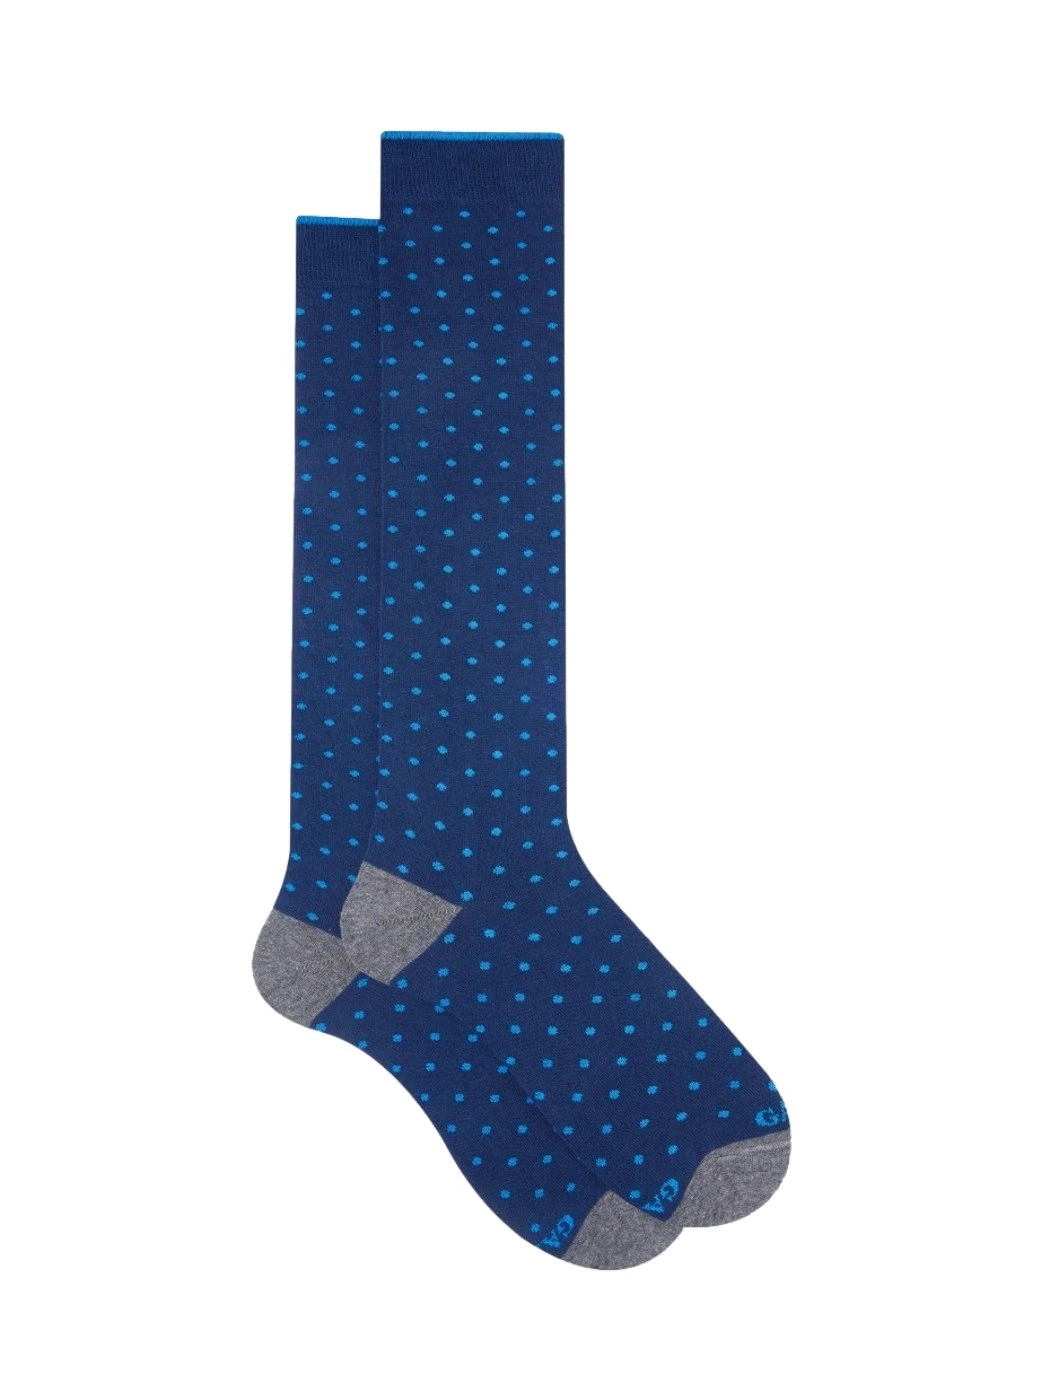 Long socks man cotton mustard pattern polka dots Gallo